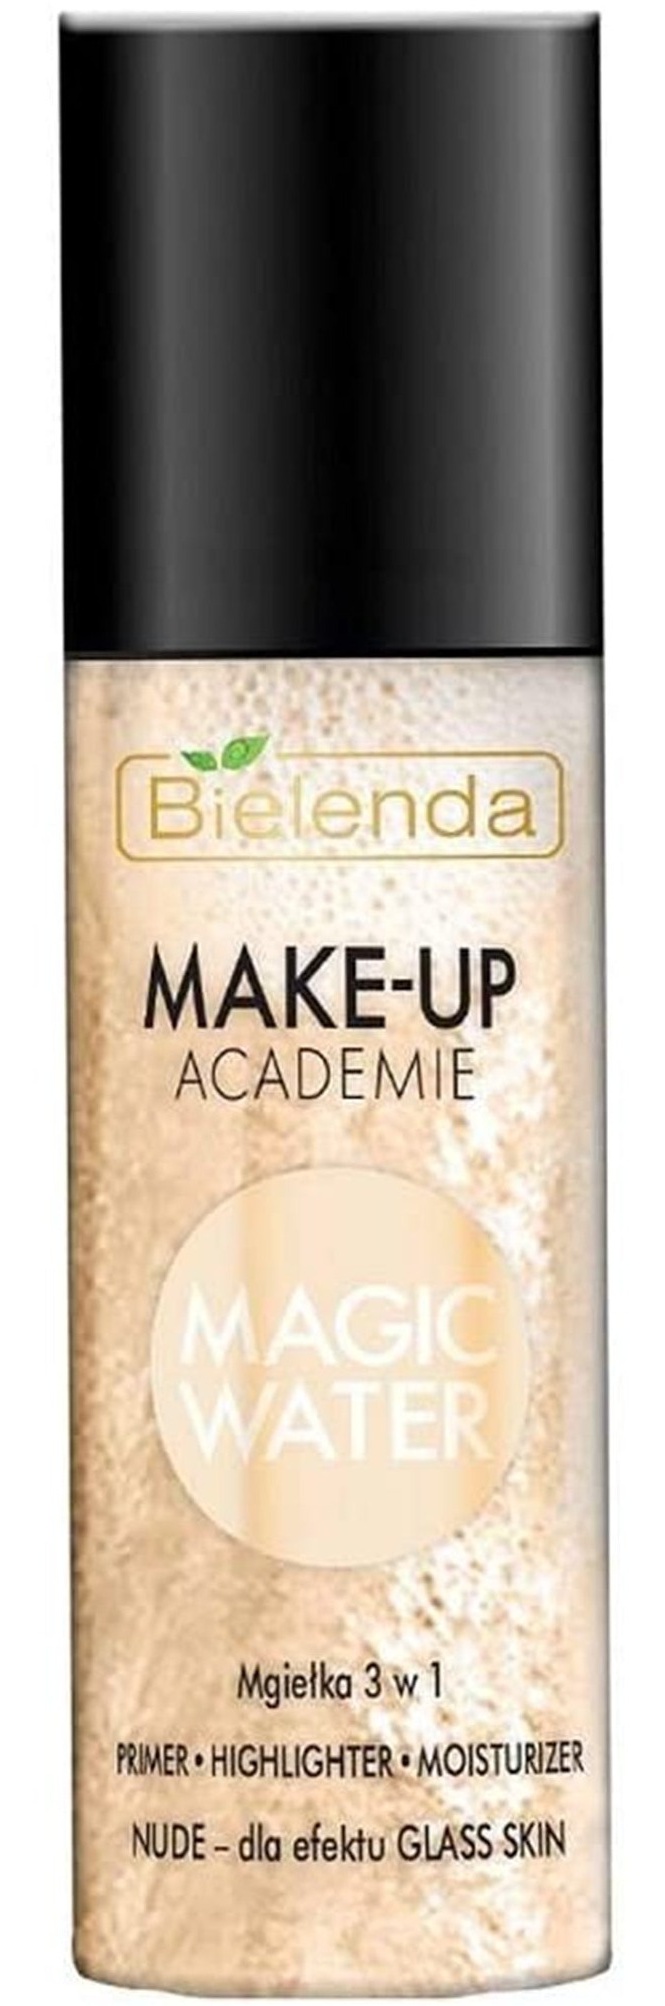 Bielenda Make-Up Academie Magic Water 3in1 Face Mist Nude